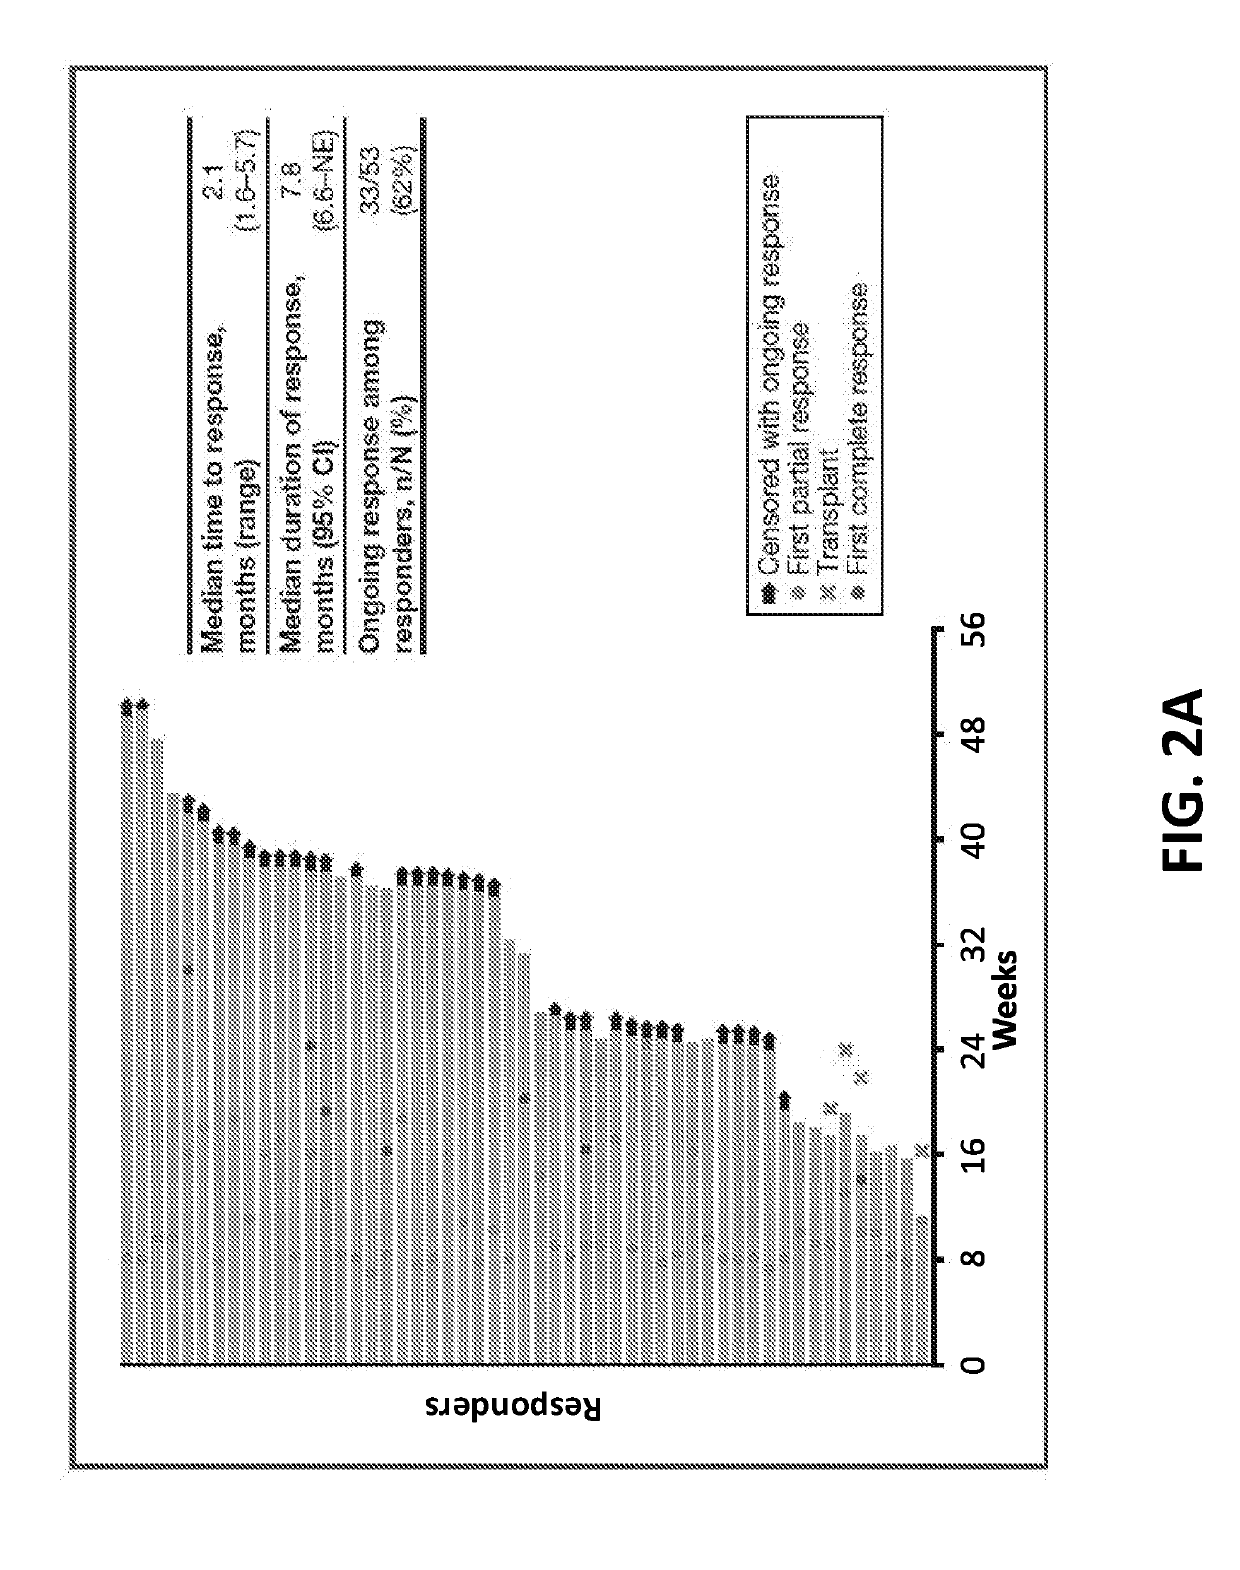 Treatment of hodgkin lymphoma using an Anti-pd-1 antibody